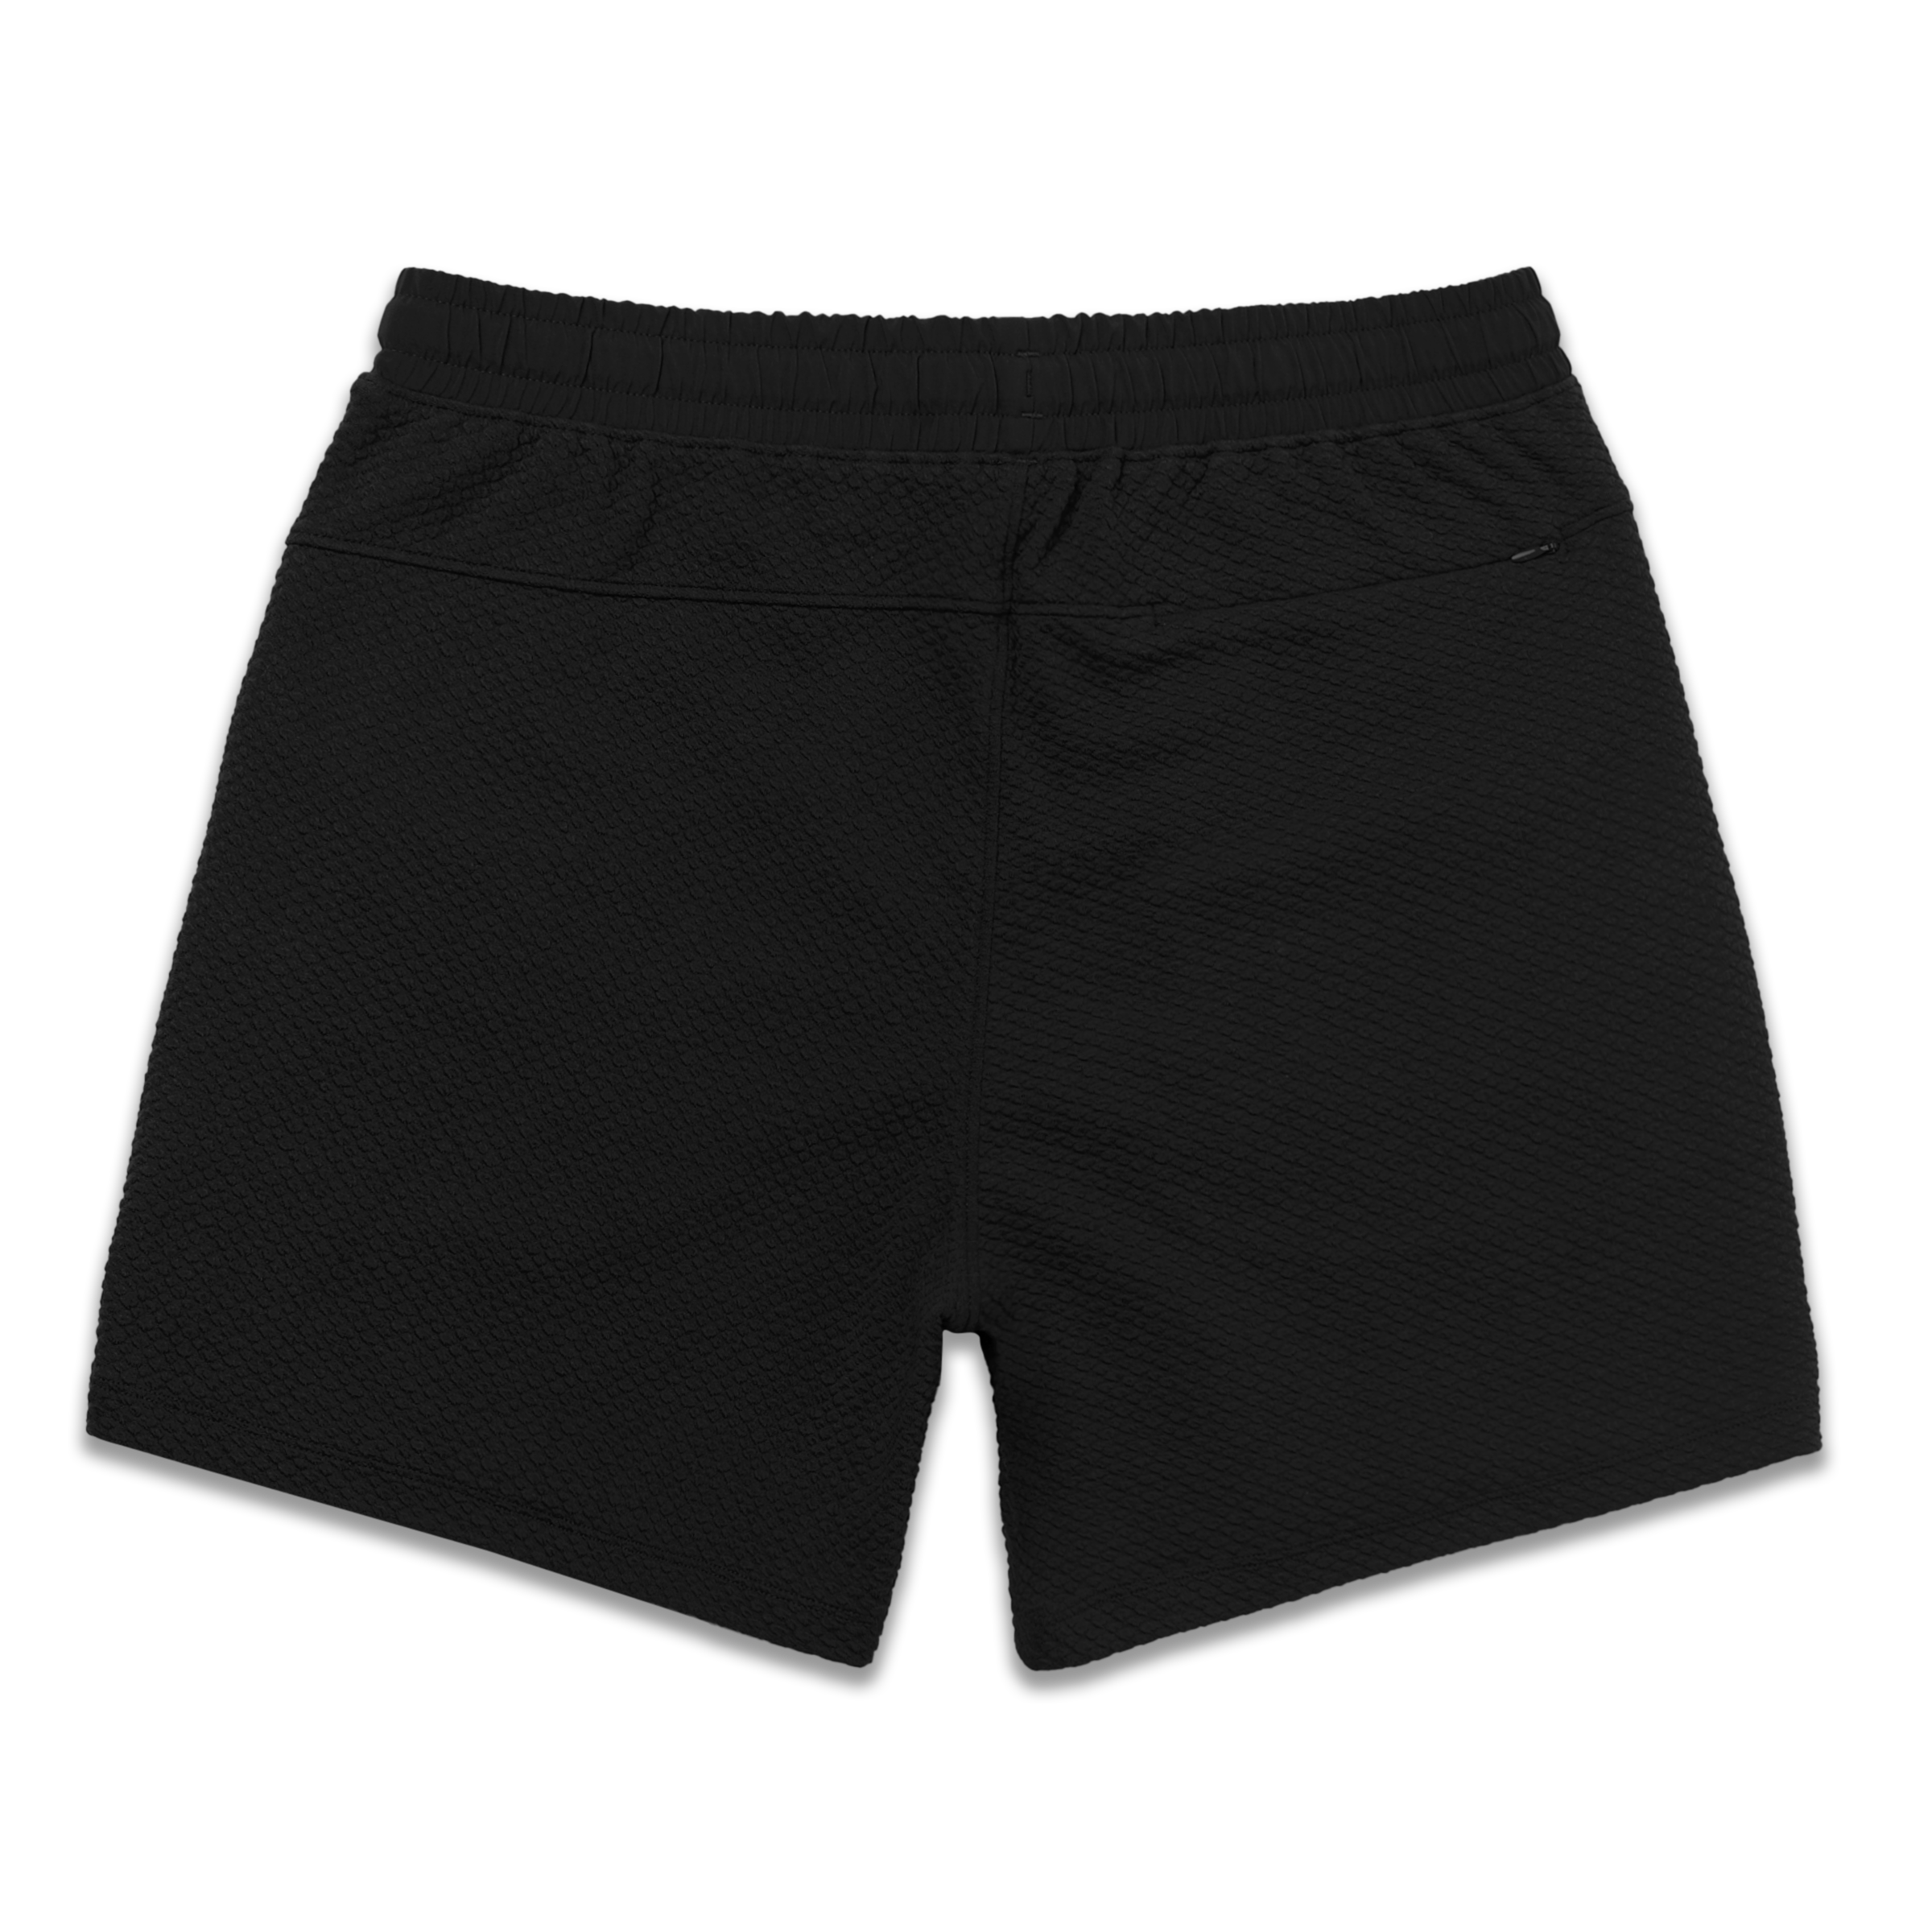 Roam Short 5.5" Black back with elastic waistband and back right hidden zipper pocket